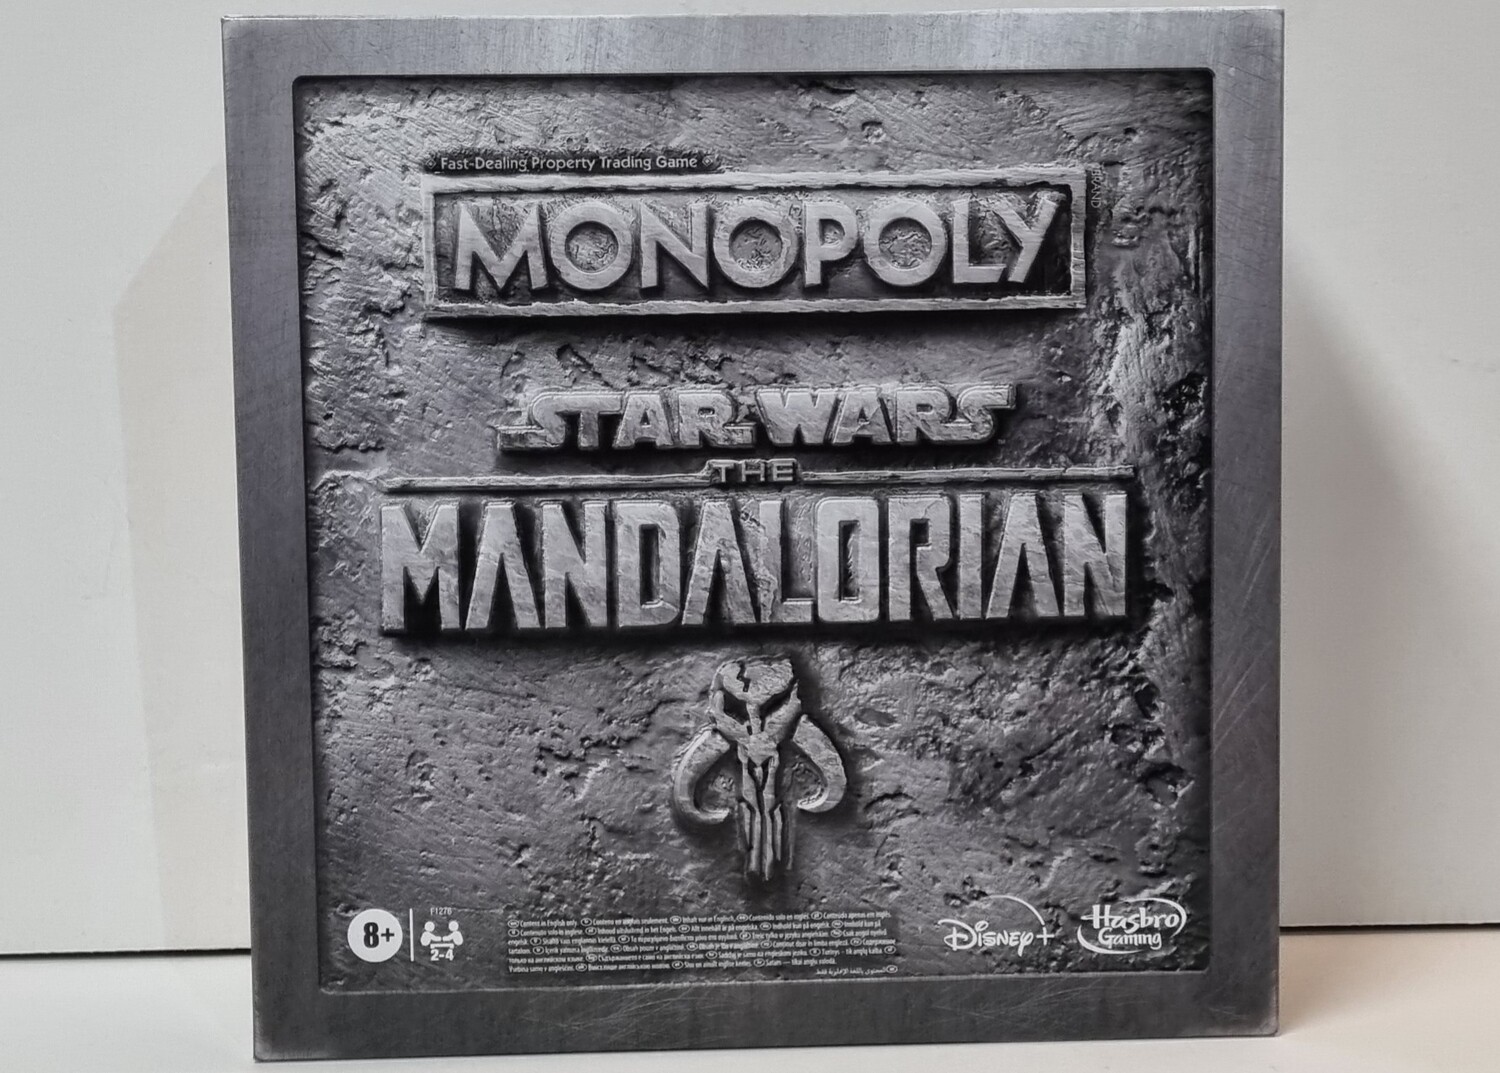 Monopoly Star Wars, The Mandalorian